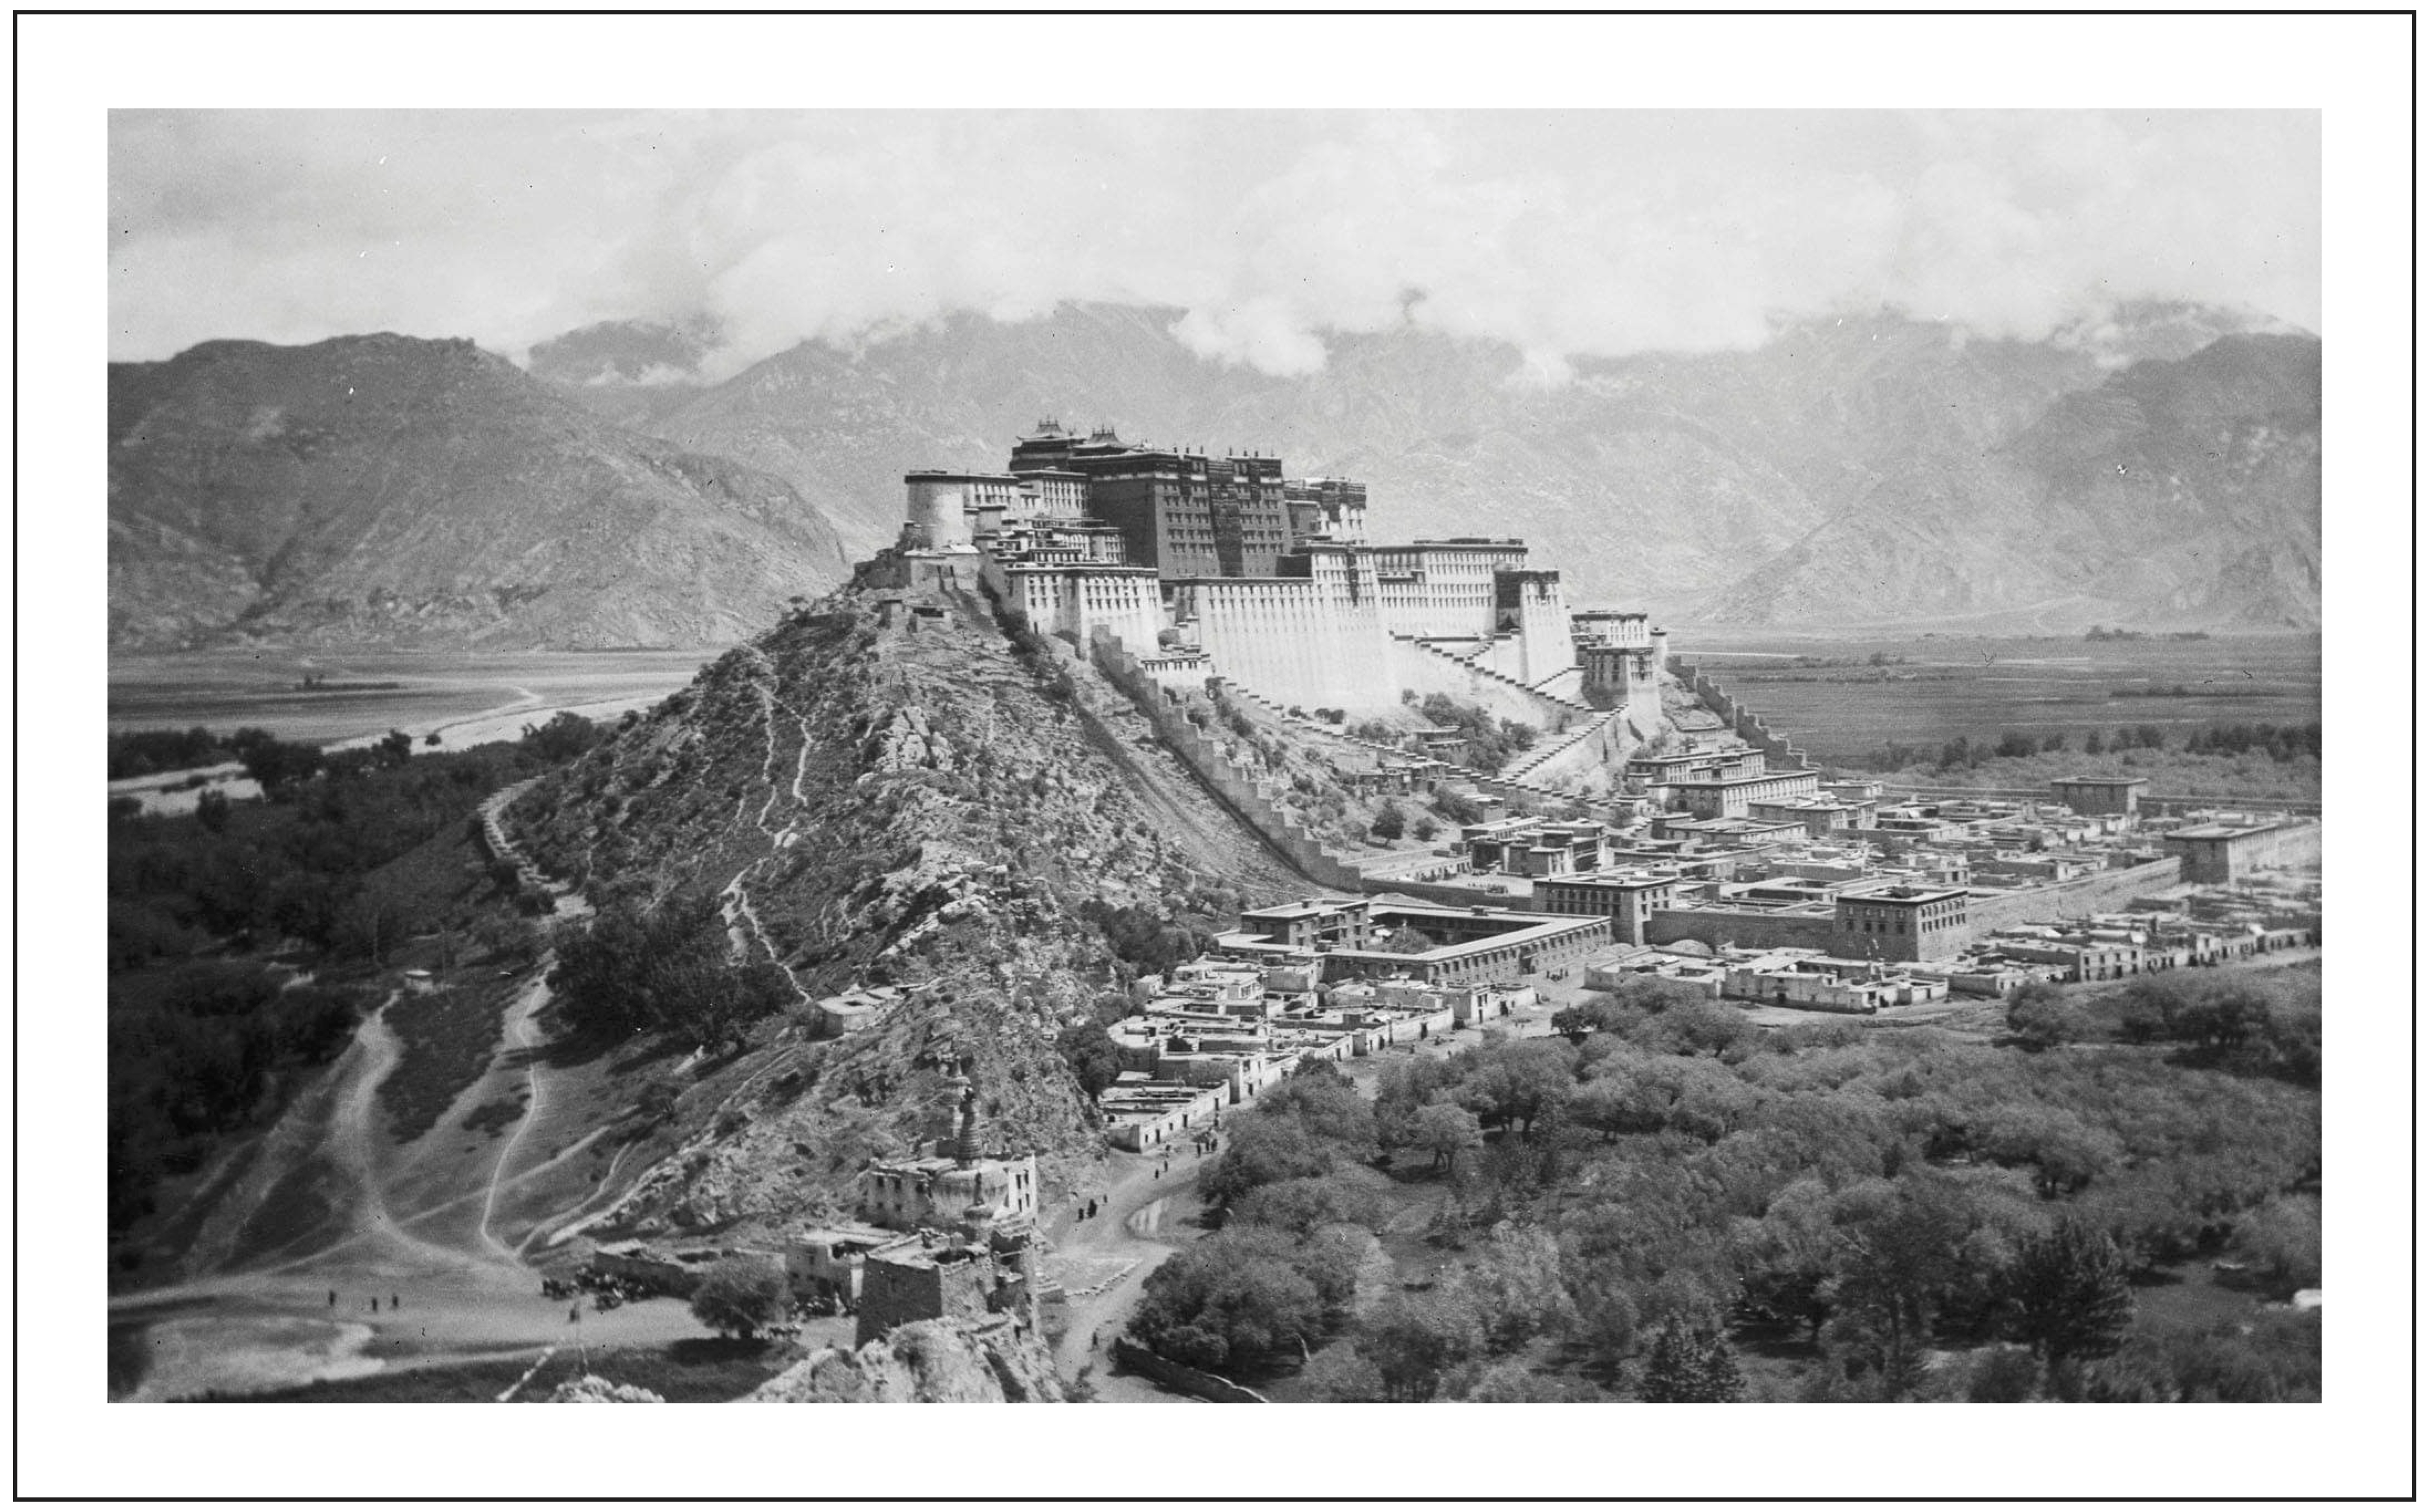 The Potala in Lhasa, Tibet